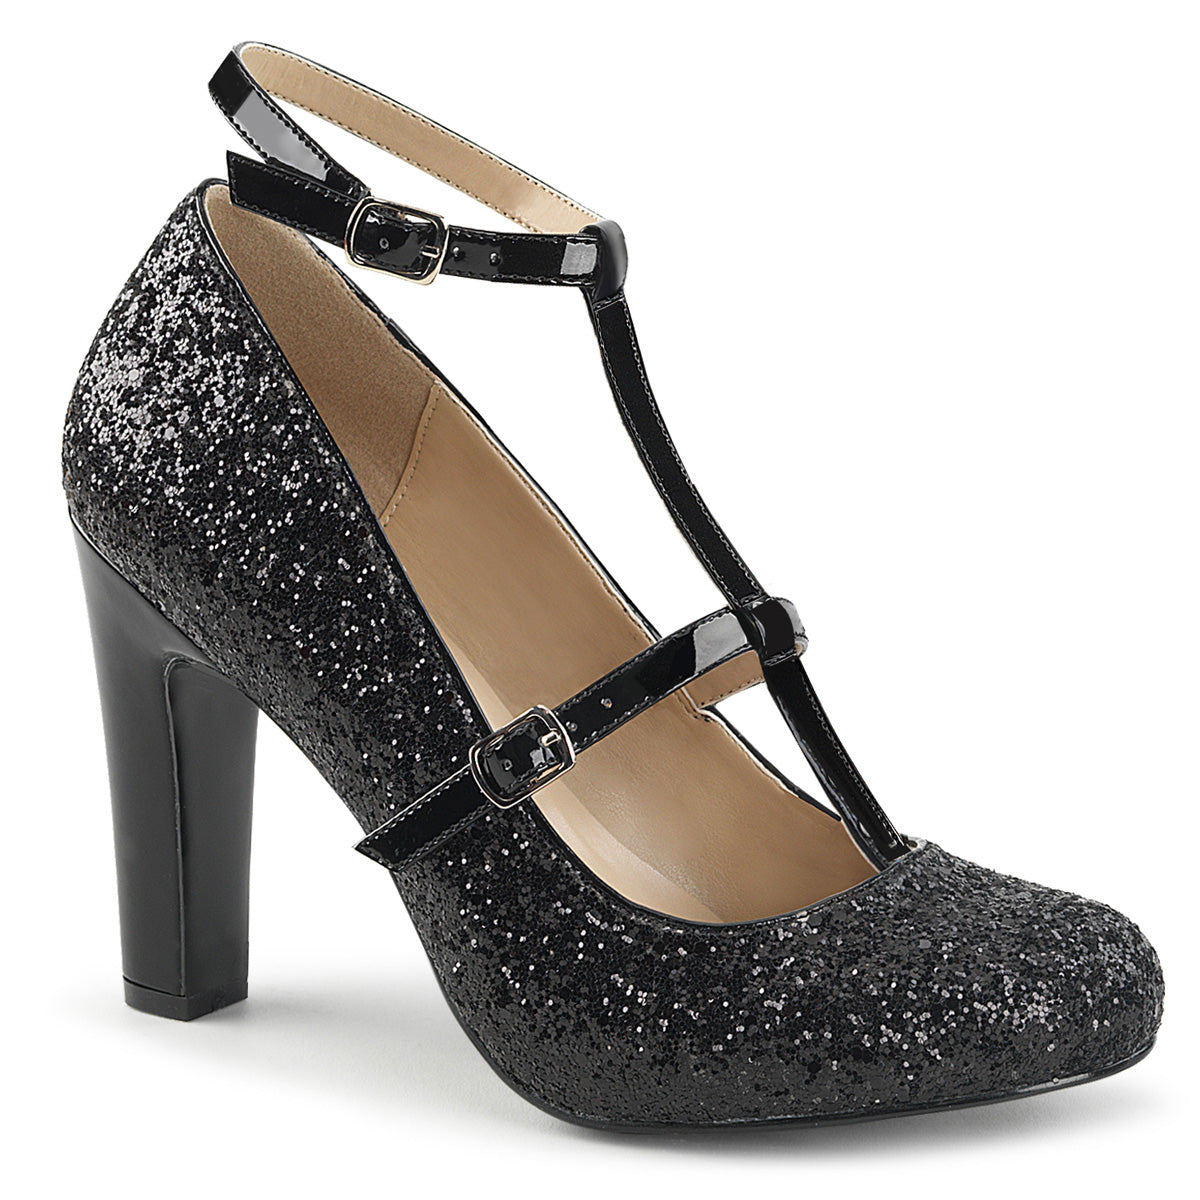 QUEEN-01 Large Size Ladies Shoes 4" Heel Black Glitter Fetish Footwear